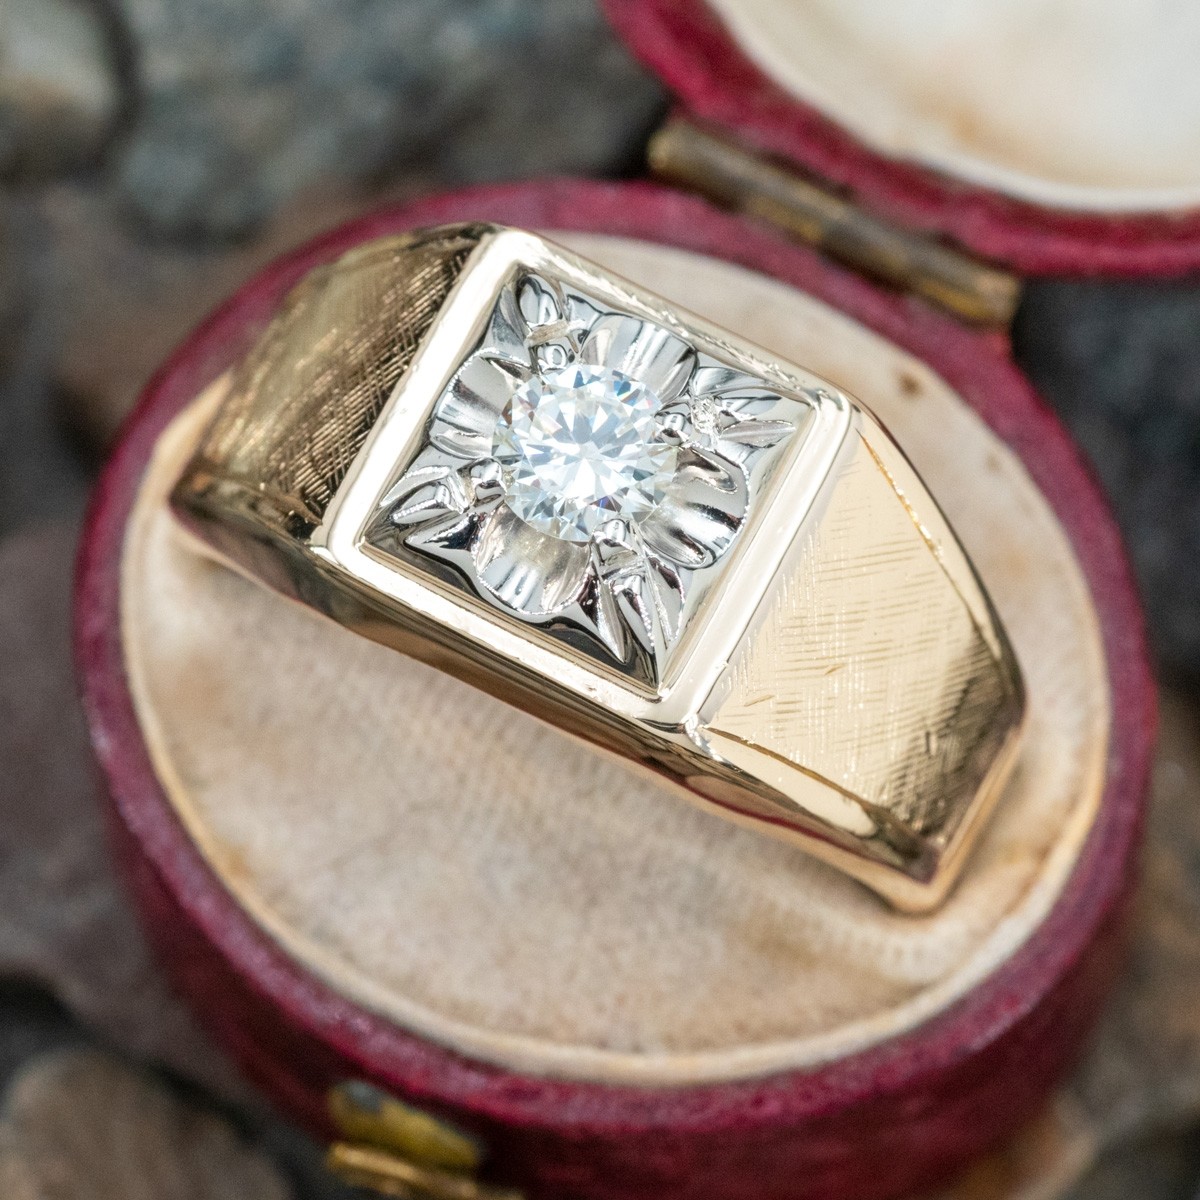 4.25 Carat Natural Black & White Diamond Mens Wedding Band Ring 14k Bl –  Liori Diamonds